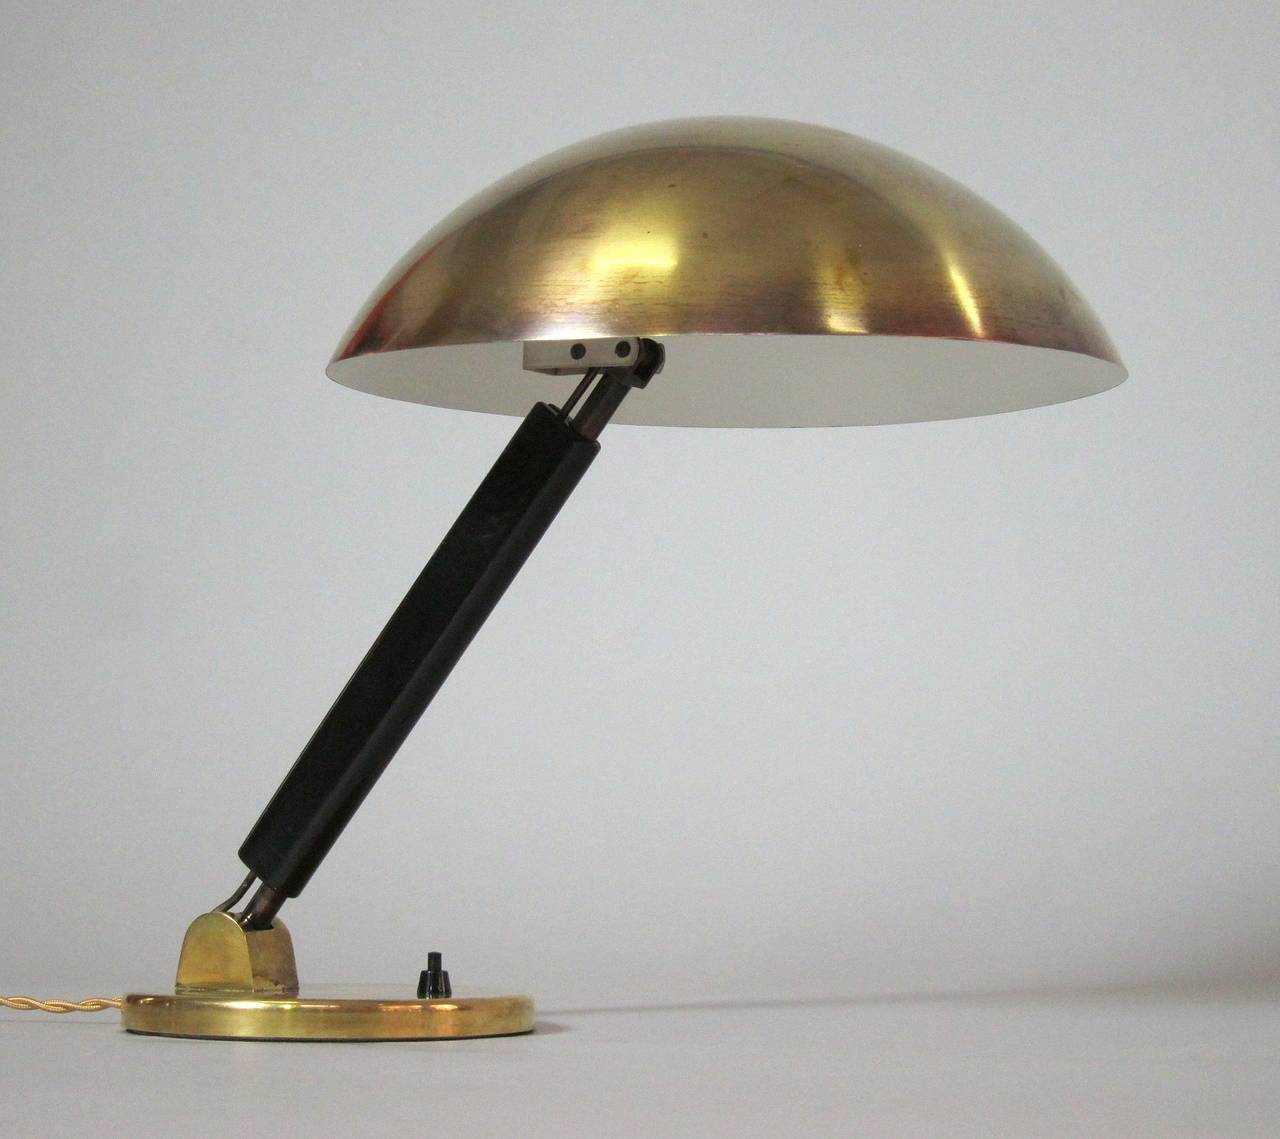 Classic Bauhaus desk lamp, designed by Karl Trabert 1935, manufactured by BAG Turgi Switzerland, adjustable tilting.